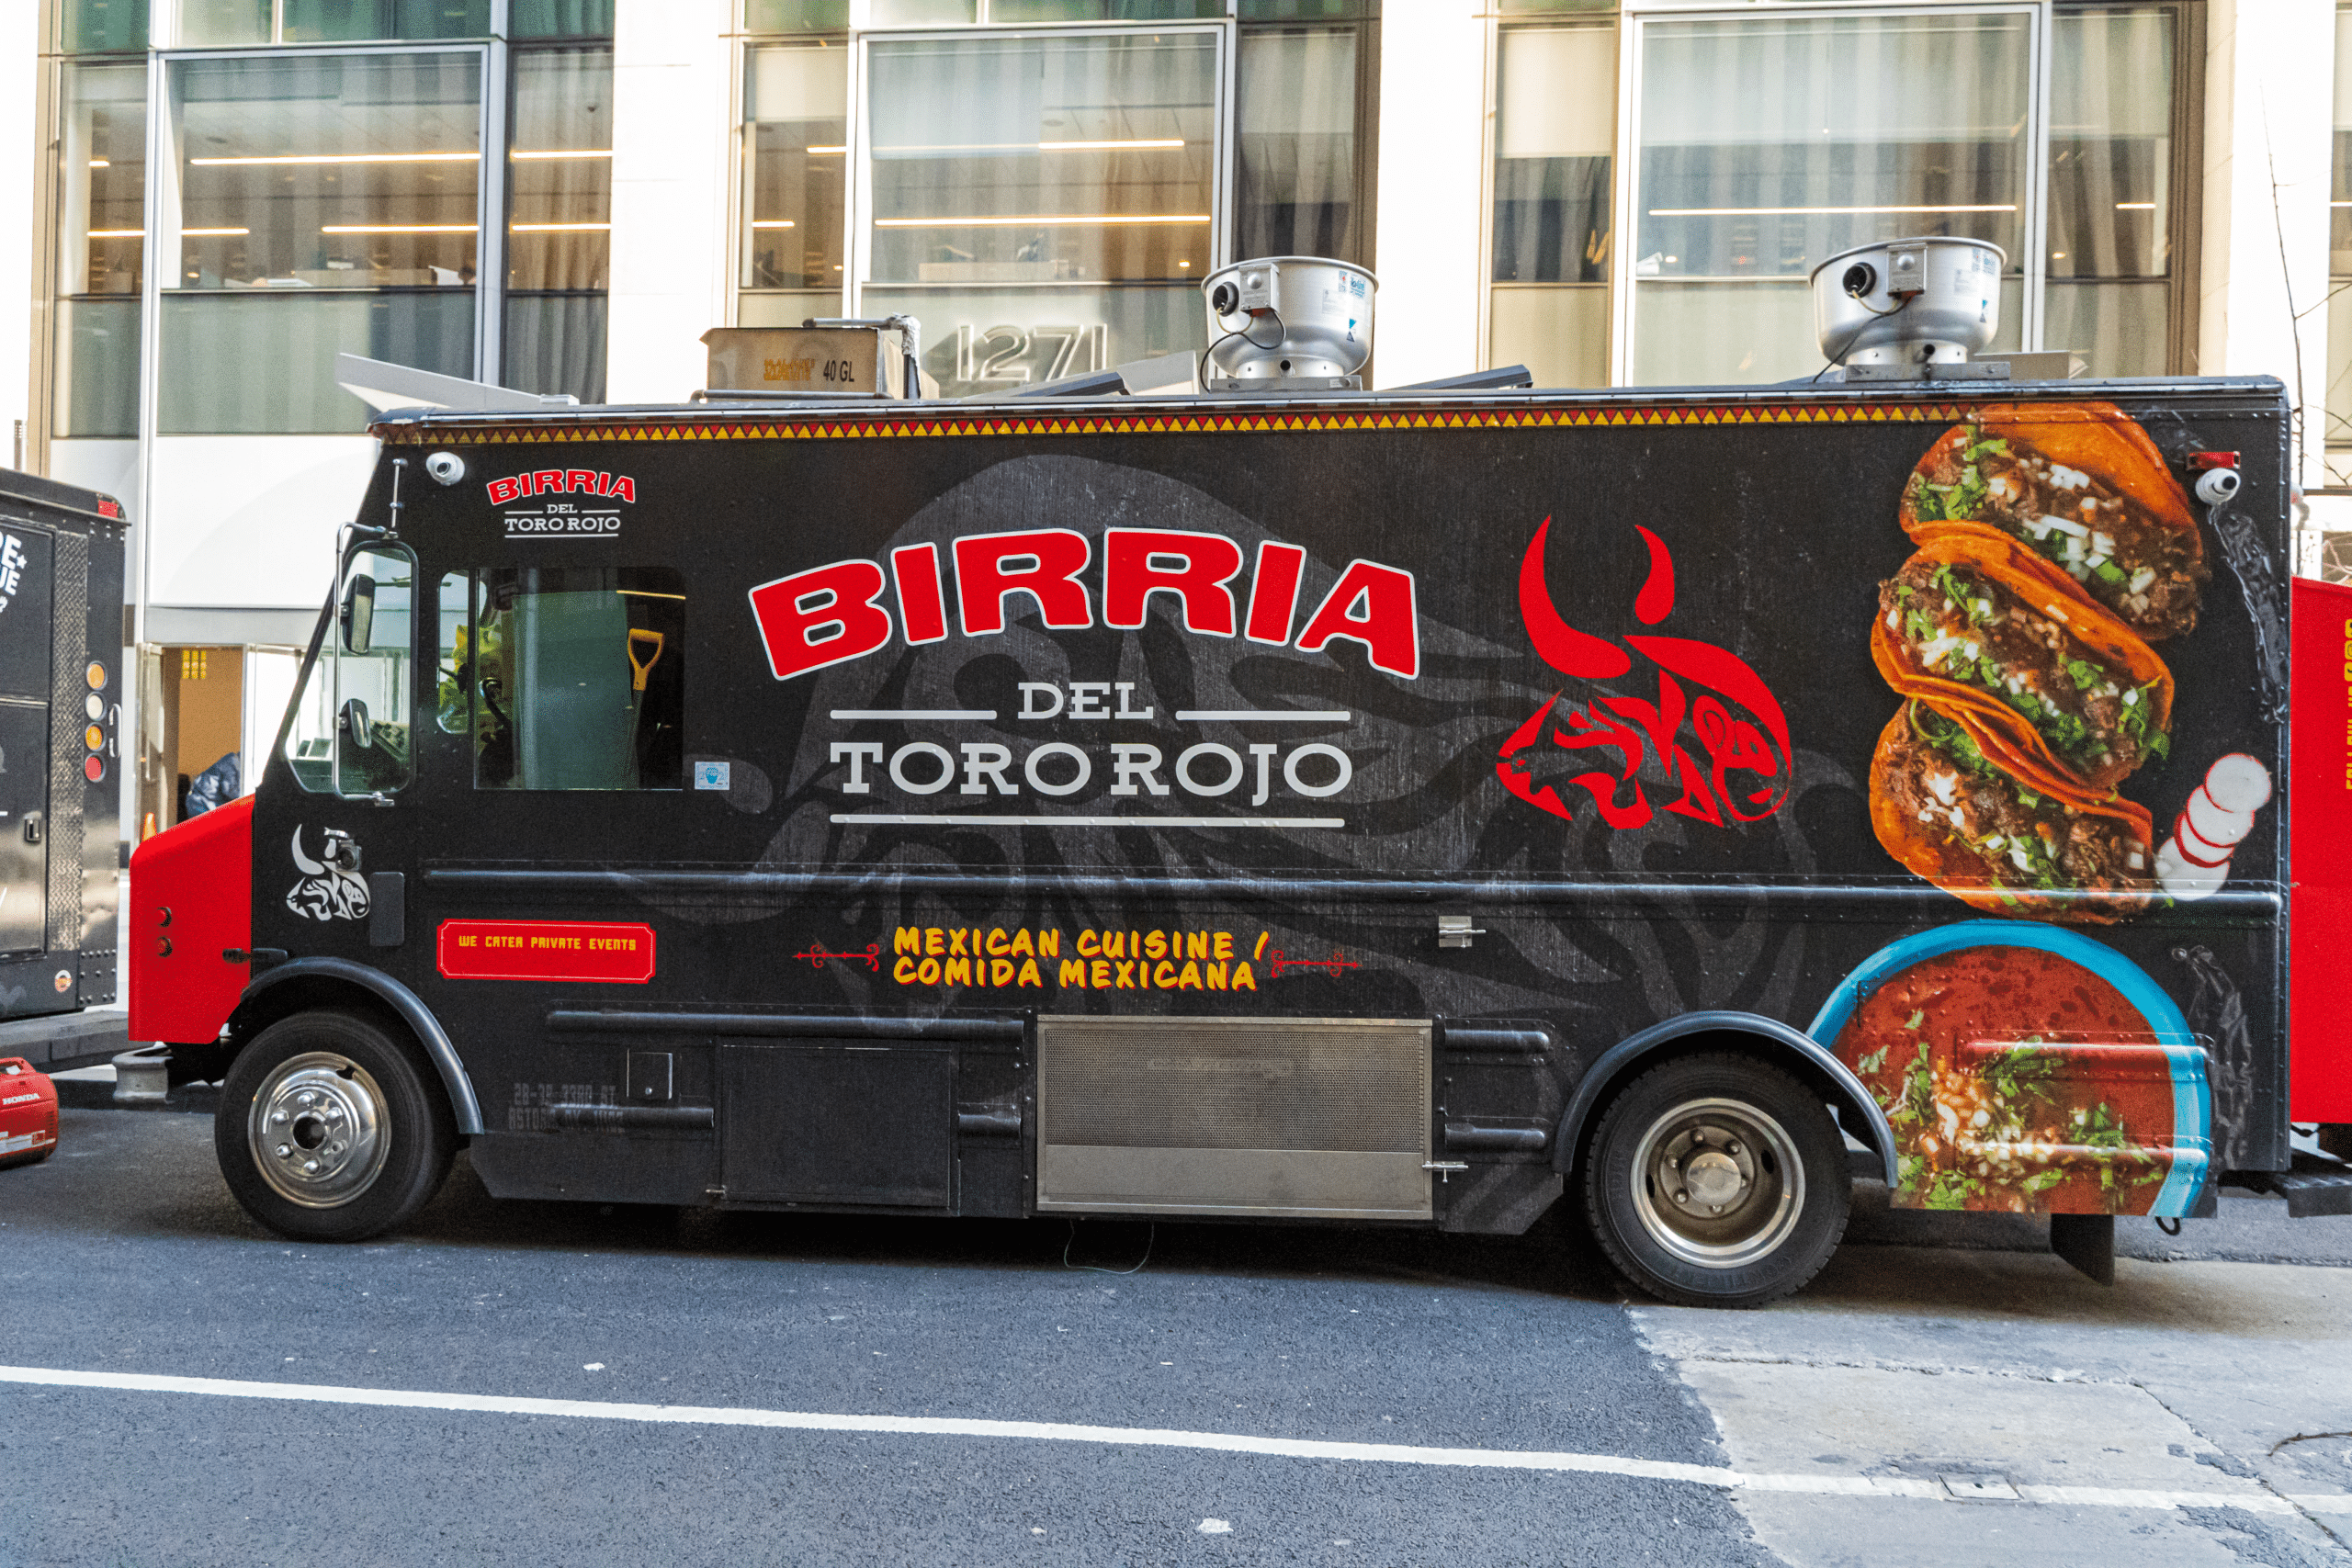 A side view of the El Toro Rojo food truck